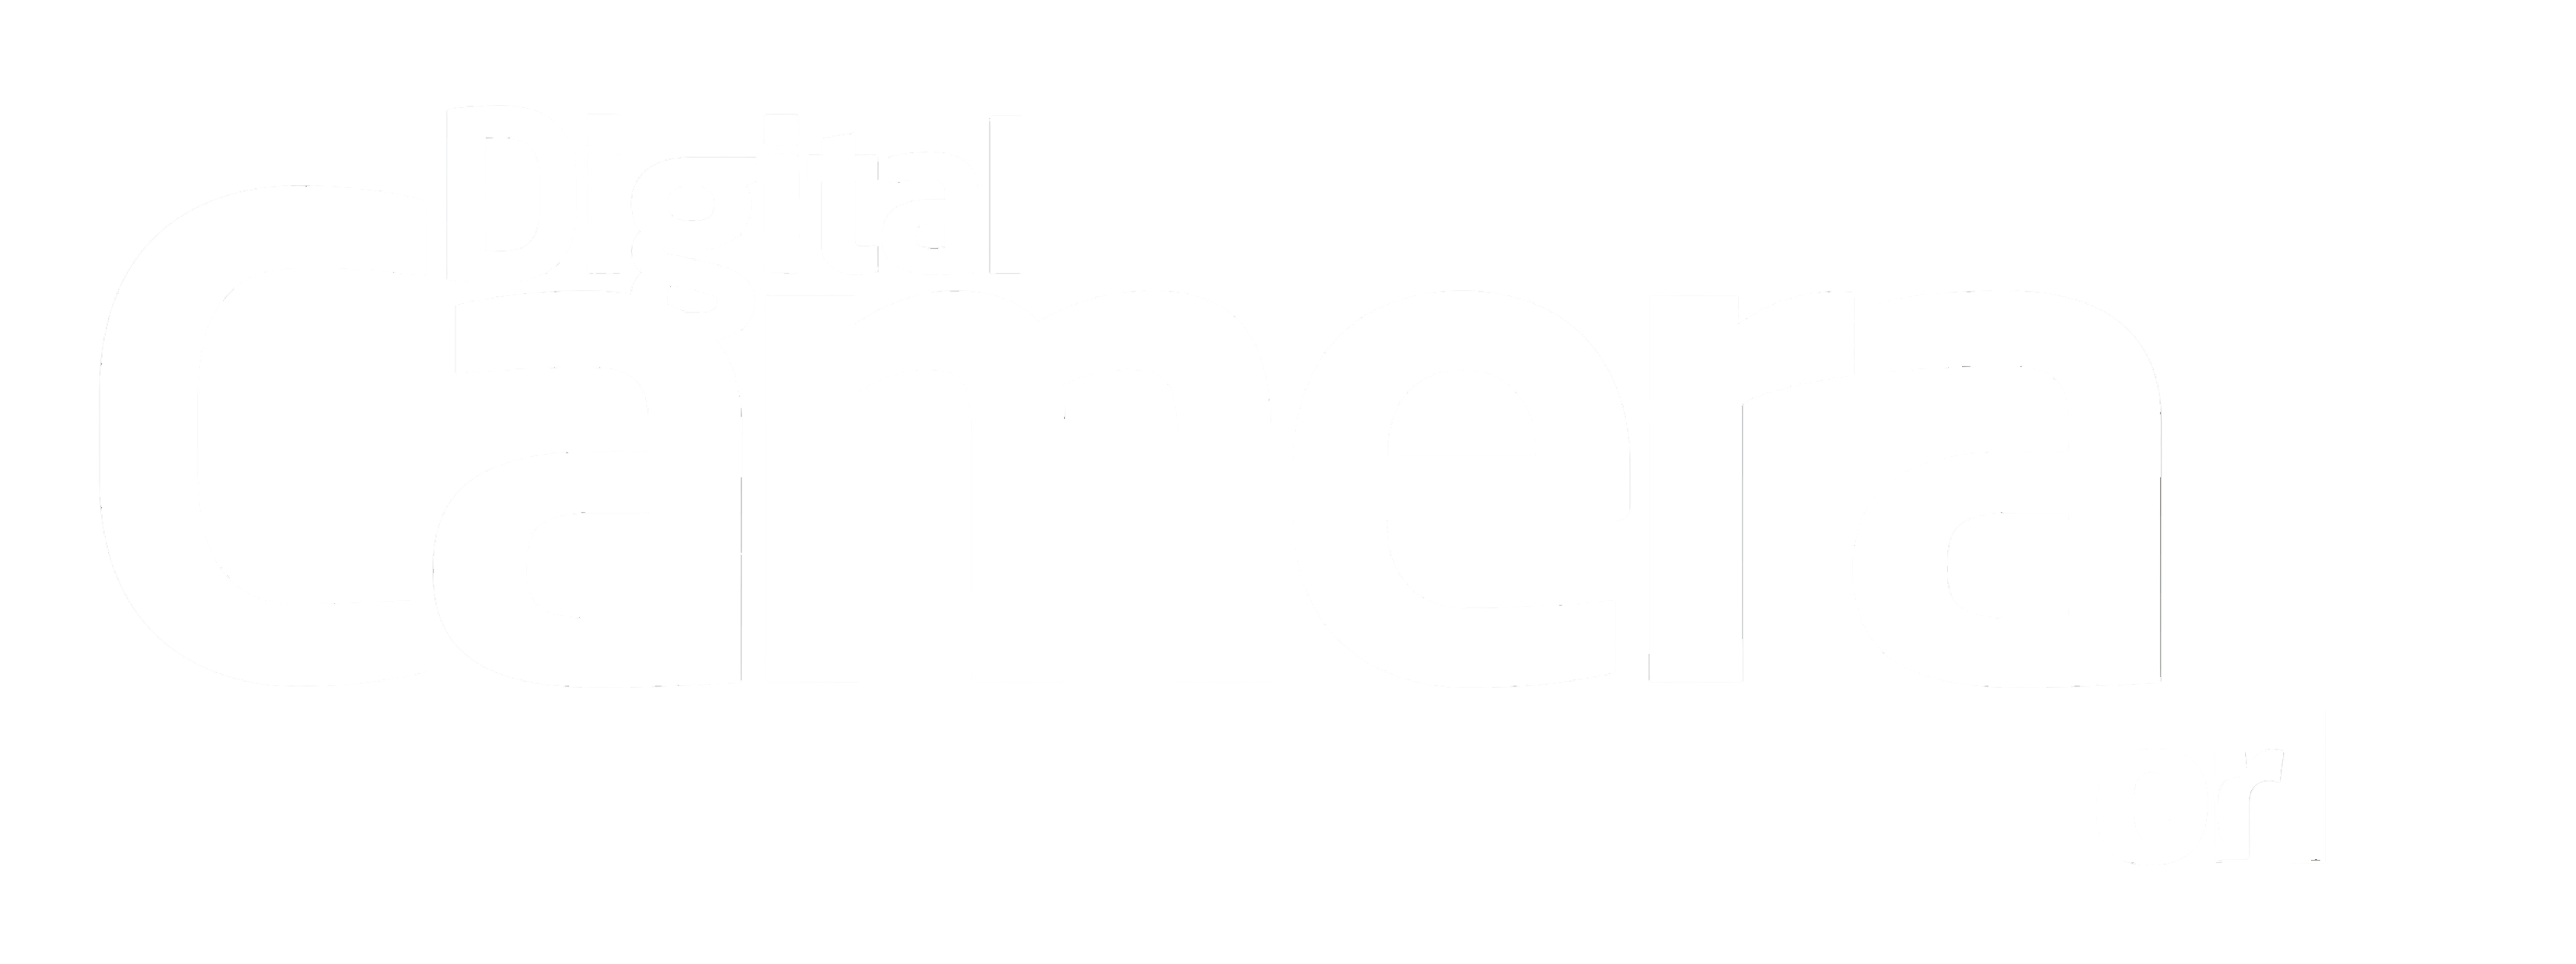 digitalcamerasworld logo white